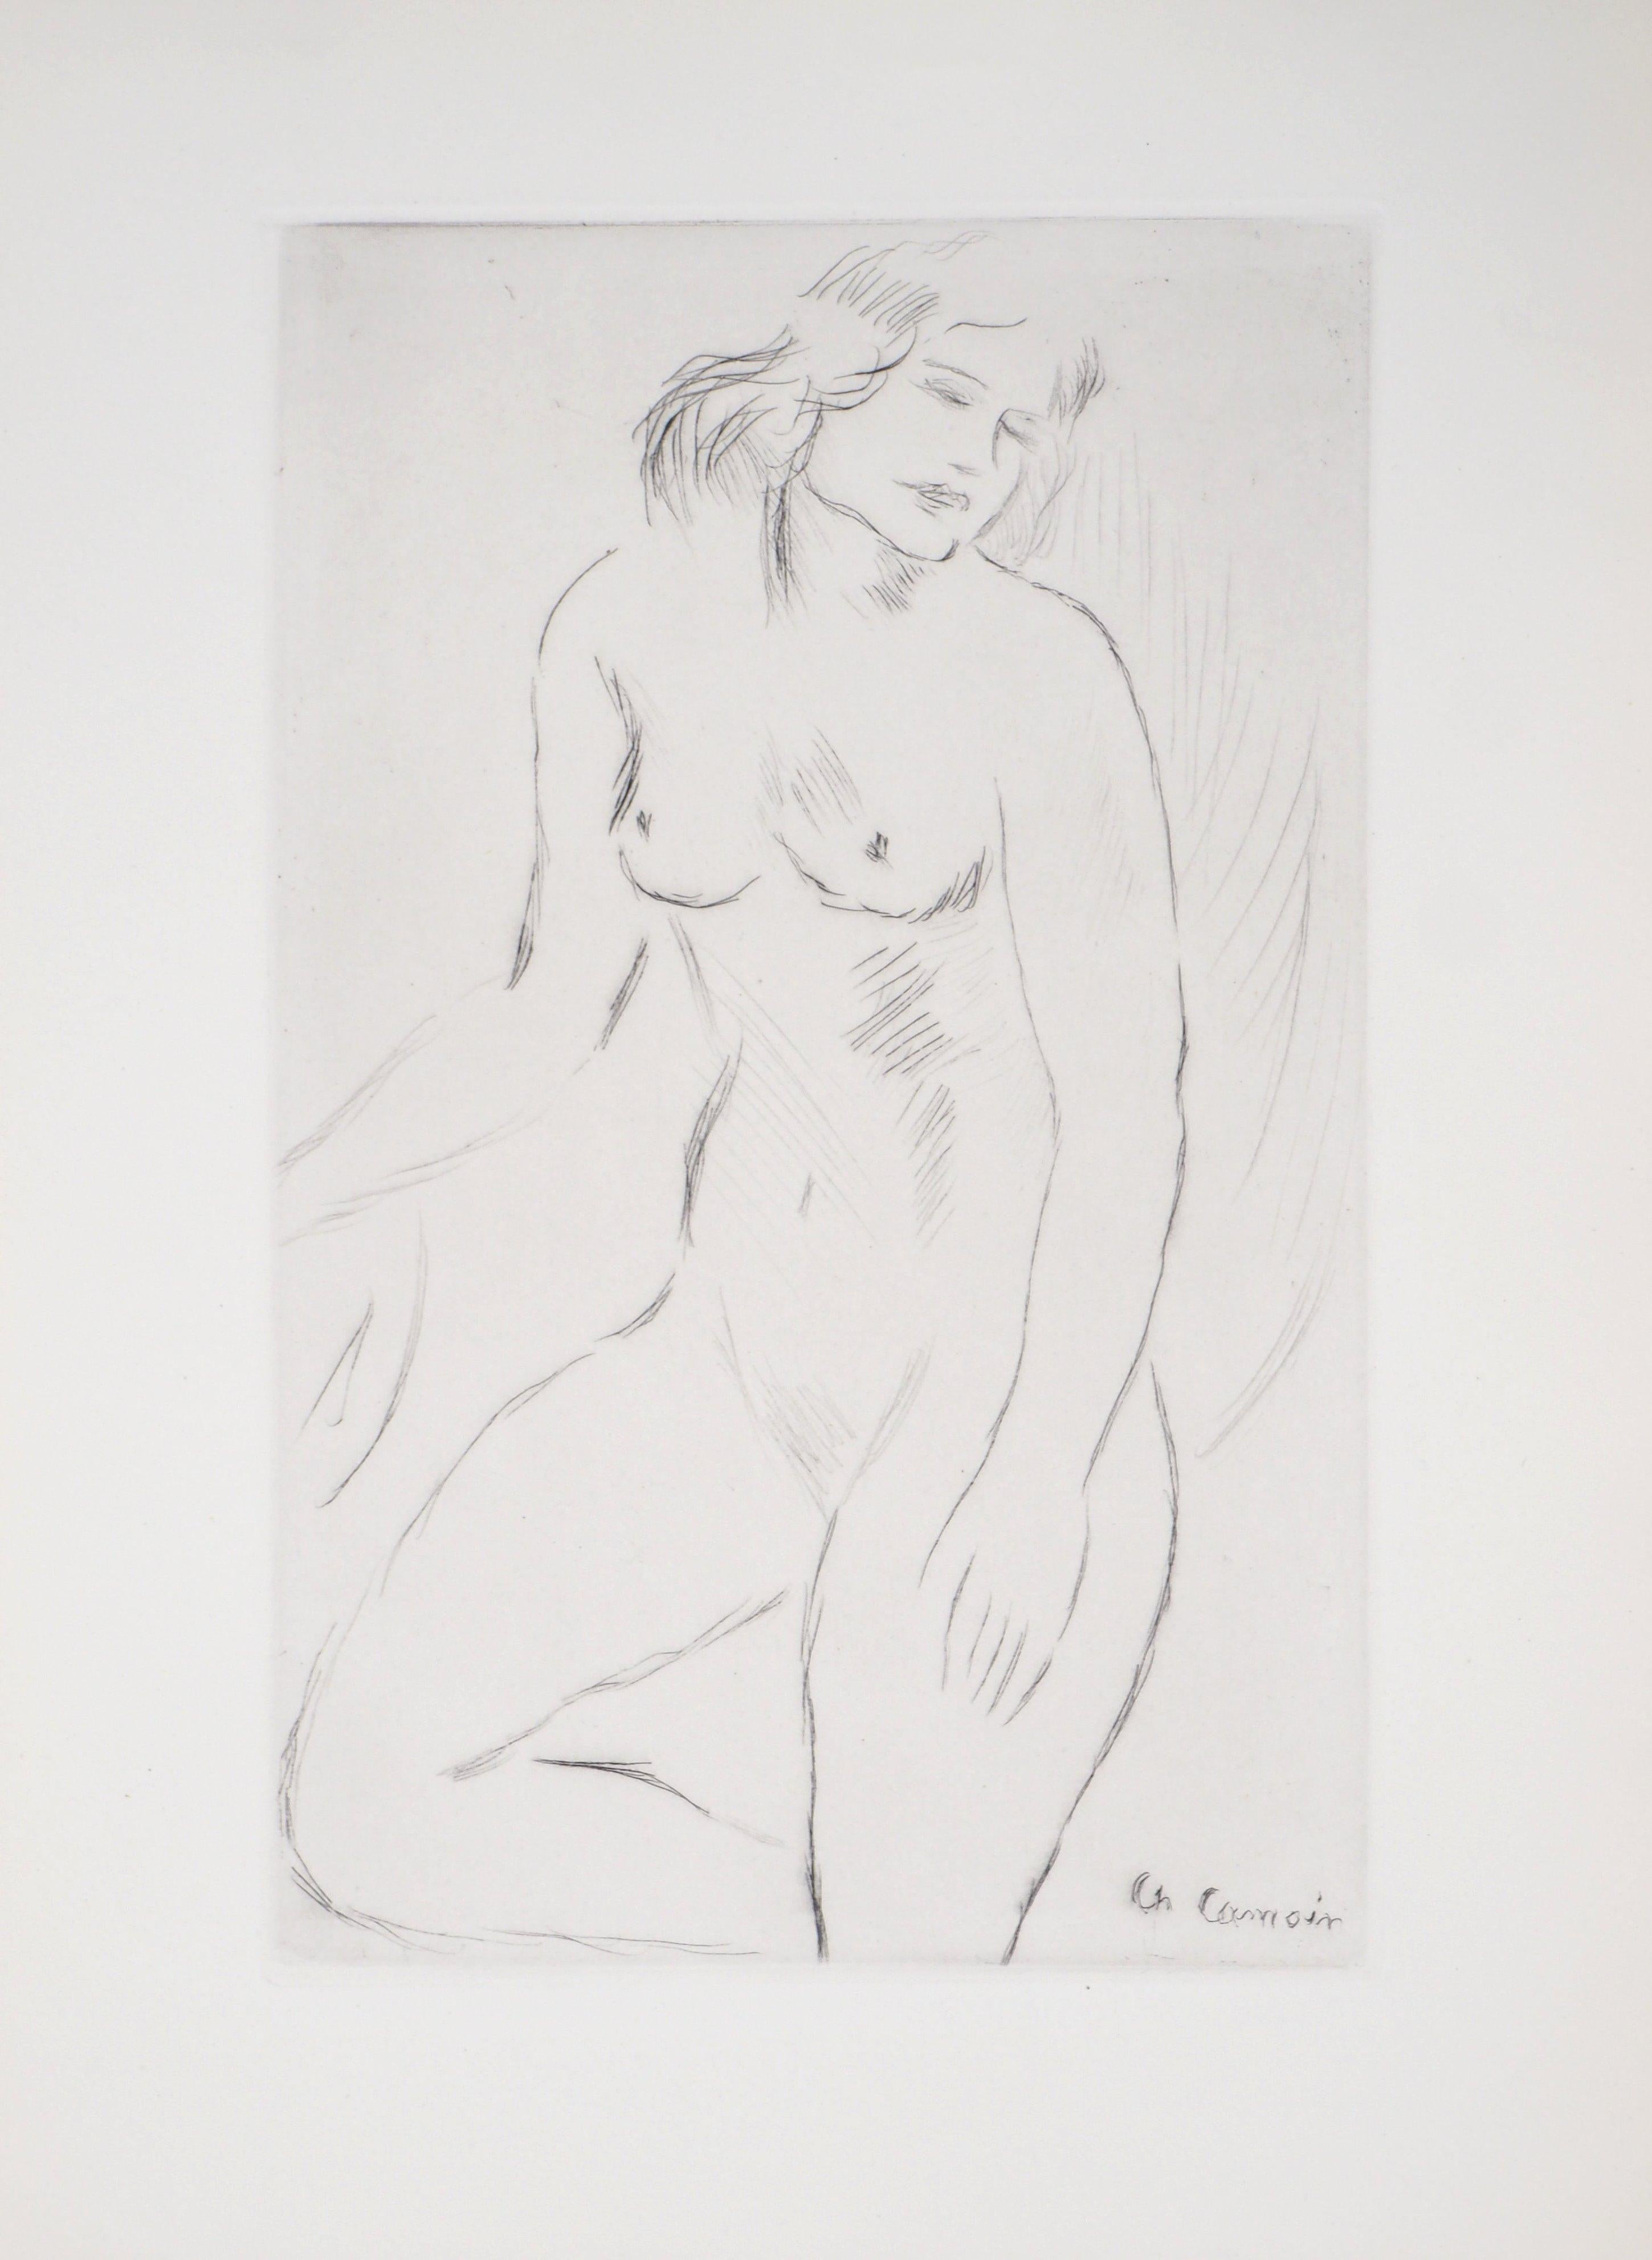 Standing Nude - Original etching